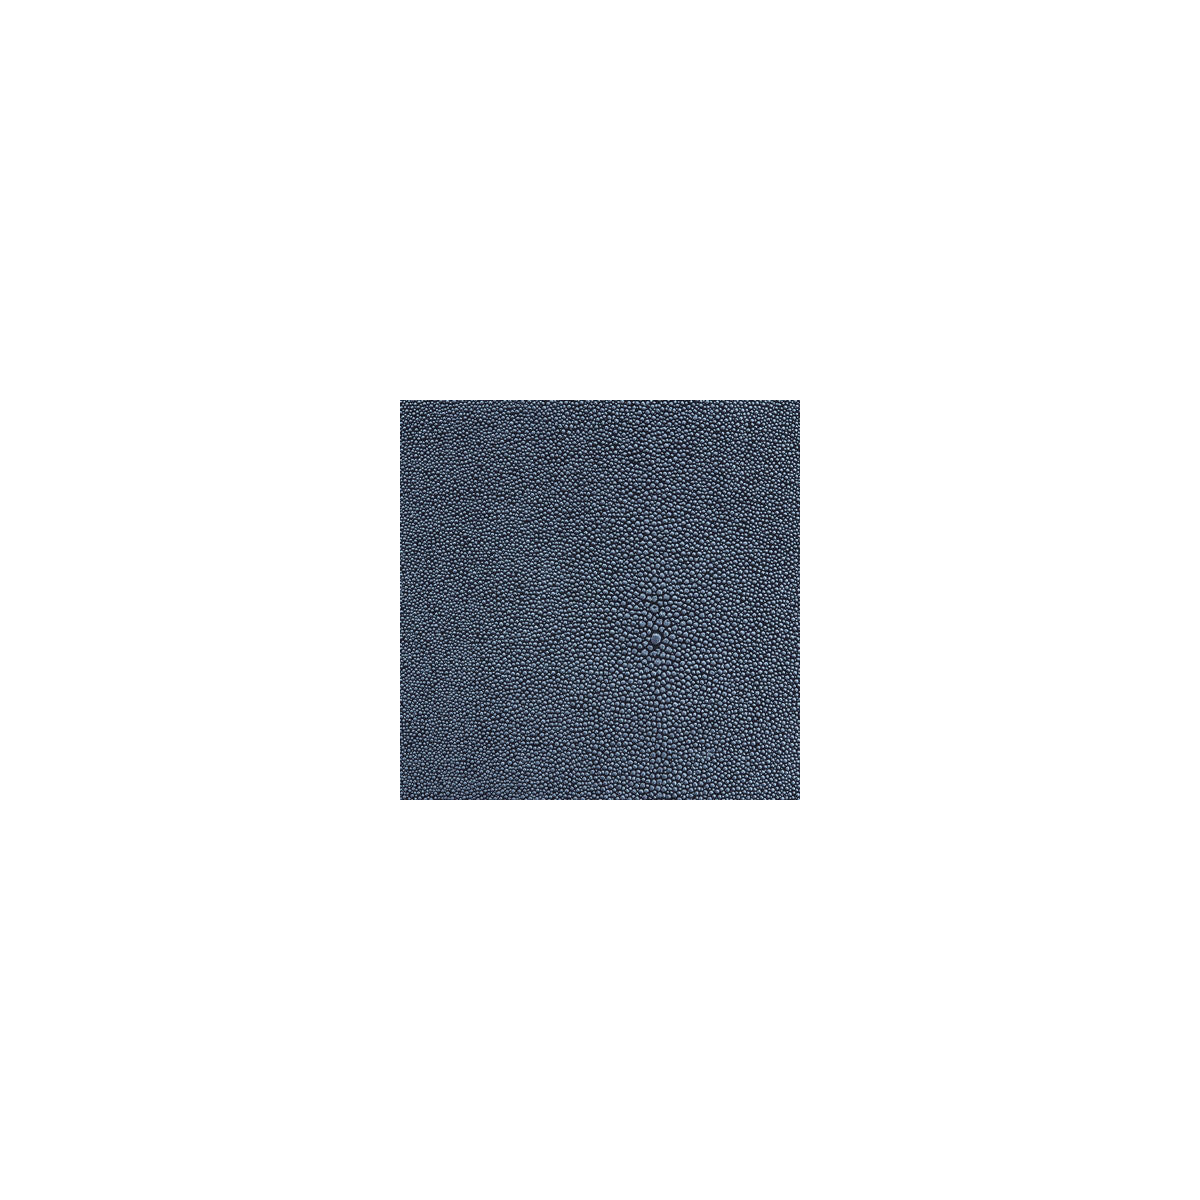 Kf Des fabric - pattern TREZZO.8.0 - by Kravet Design